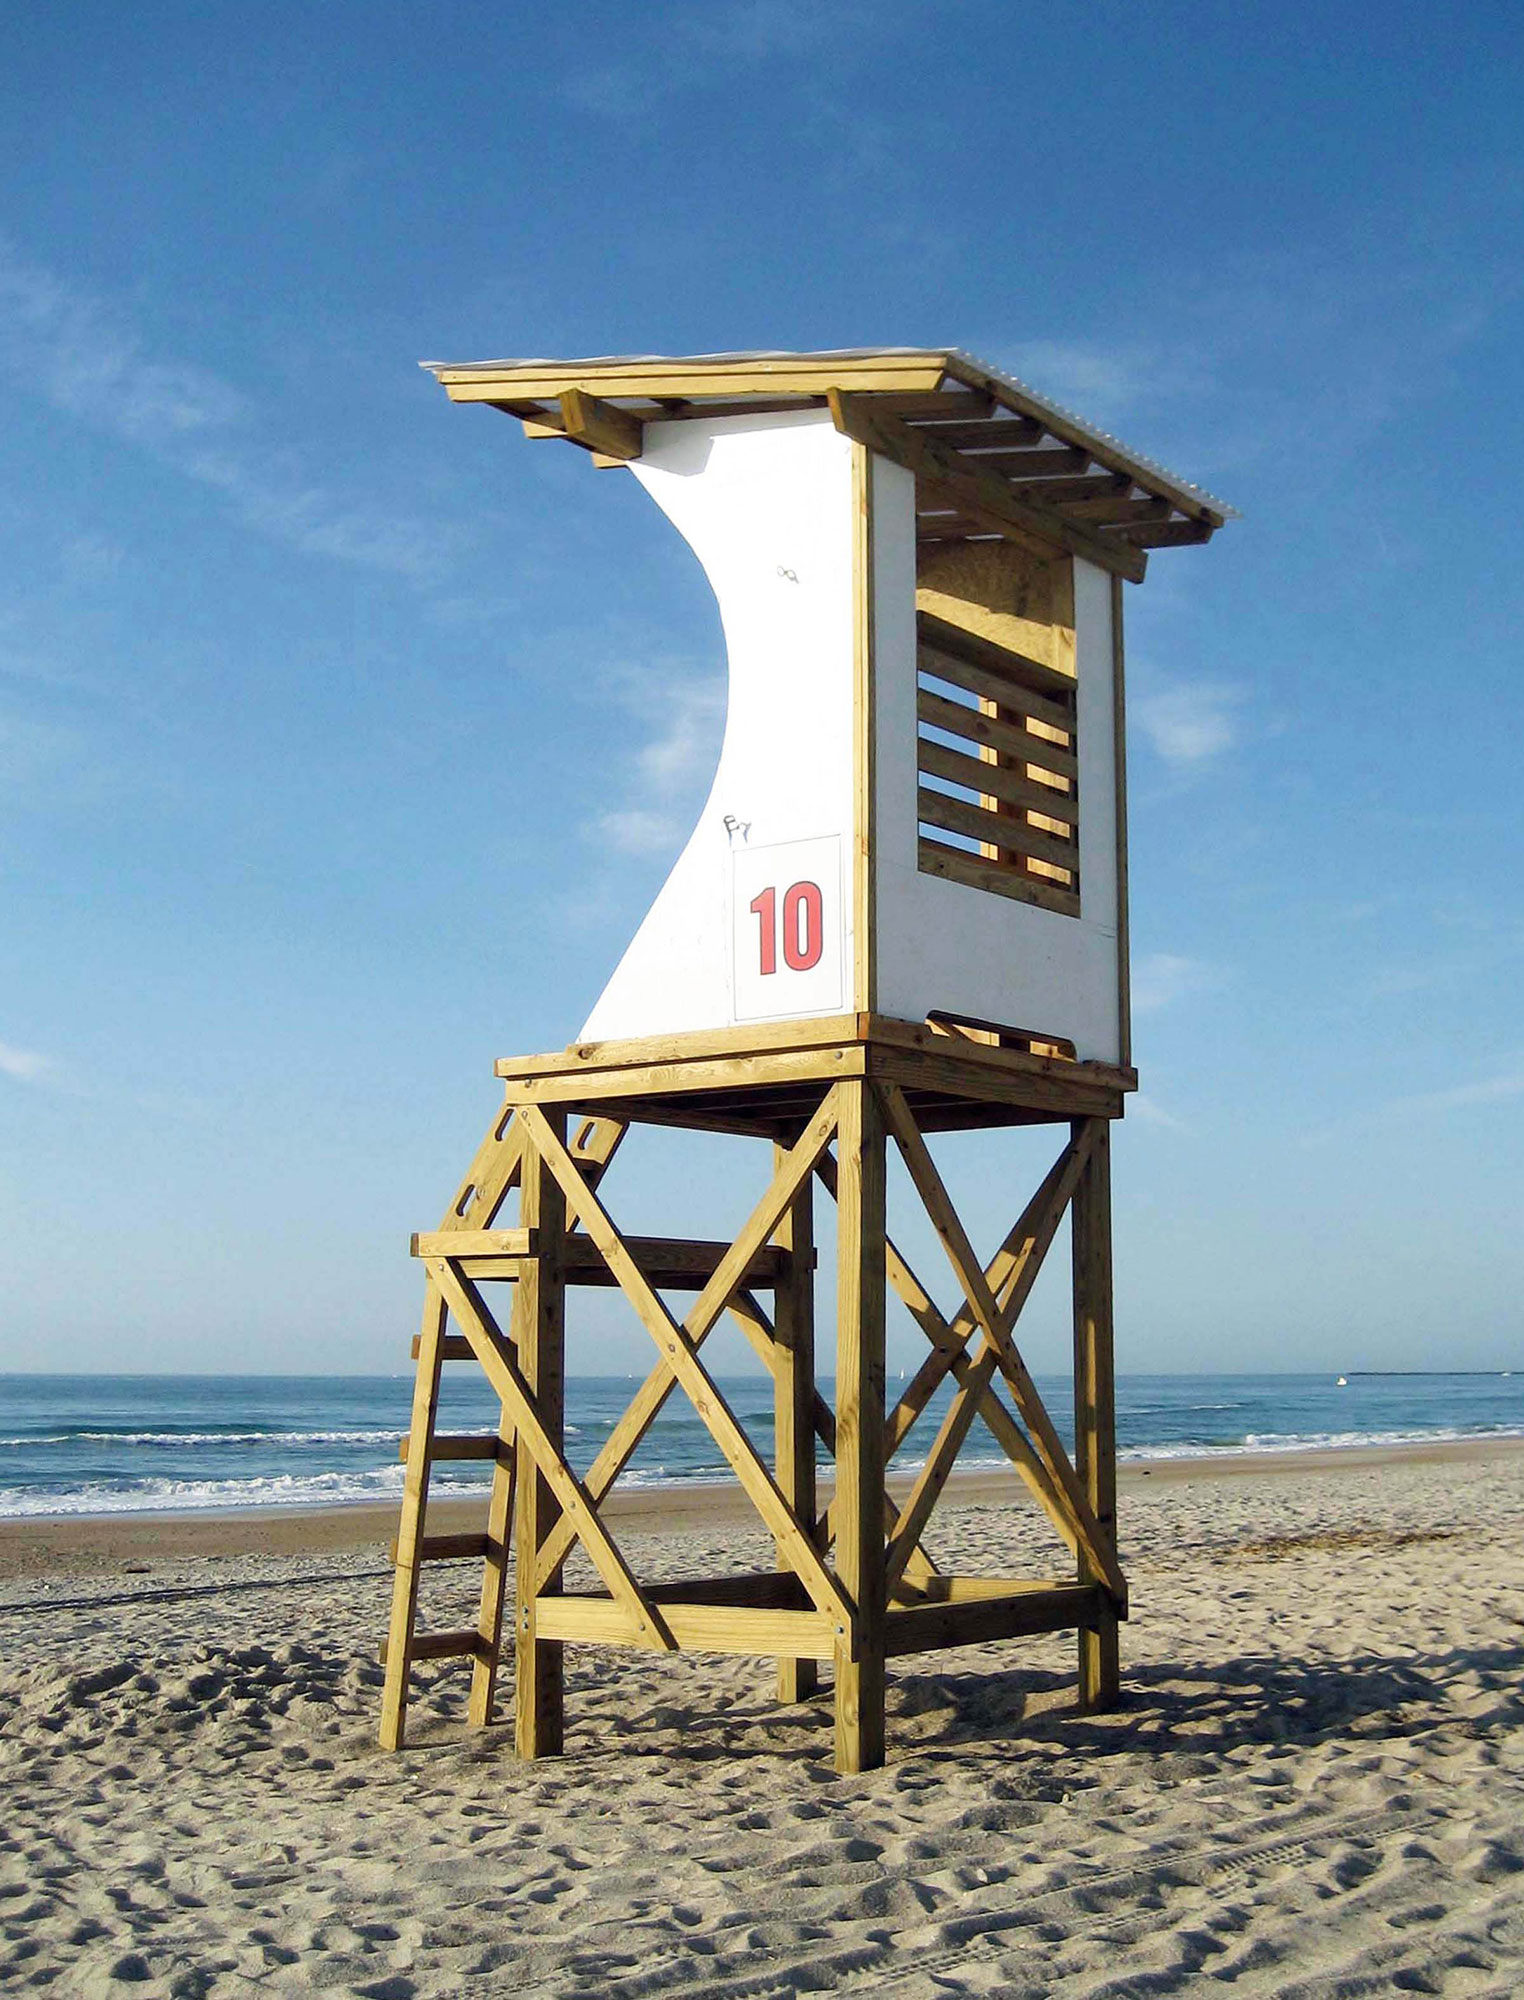 Wrightsville Beach Lifeguard Stand